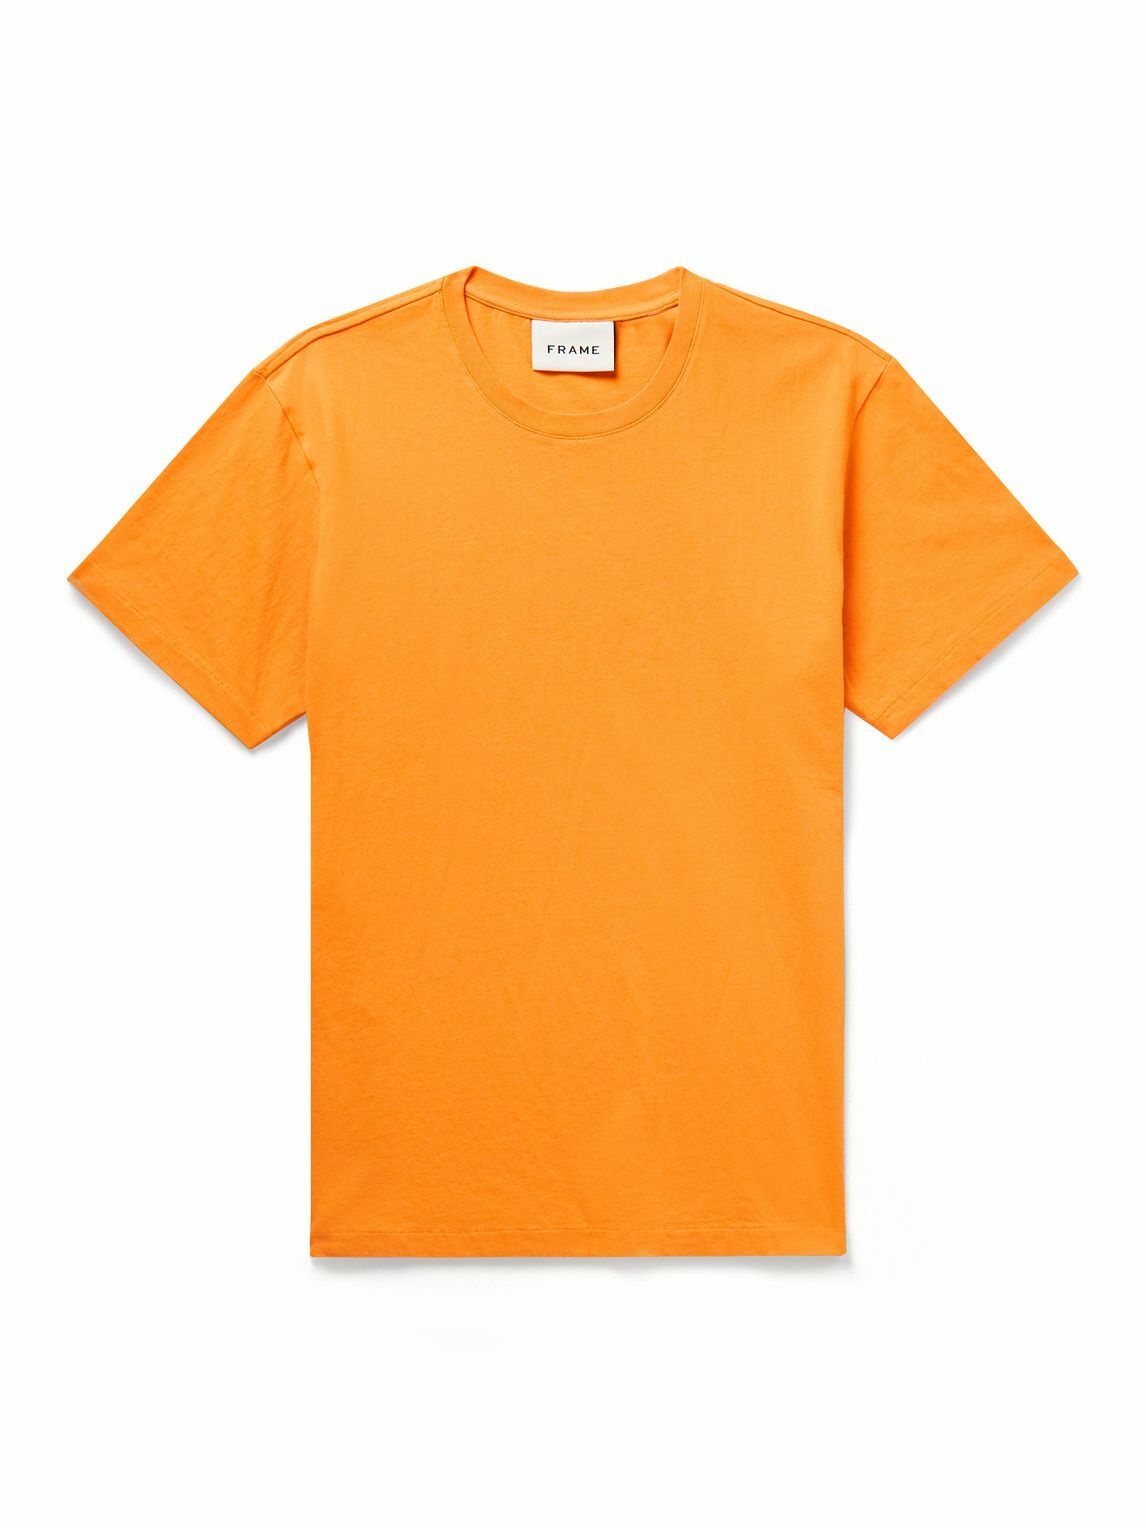 FRAME - Cotton-Jersey T-Shirt - Orange Frame Denim